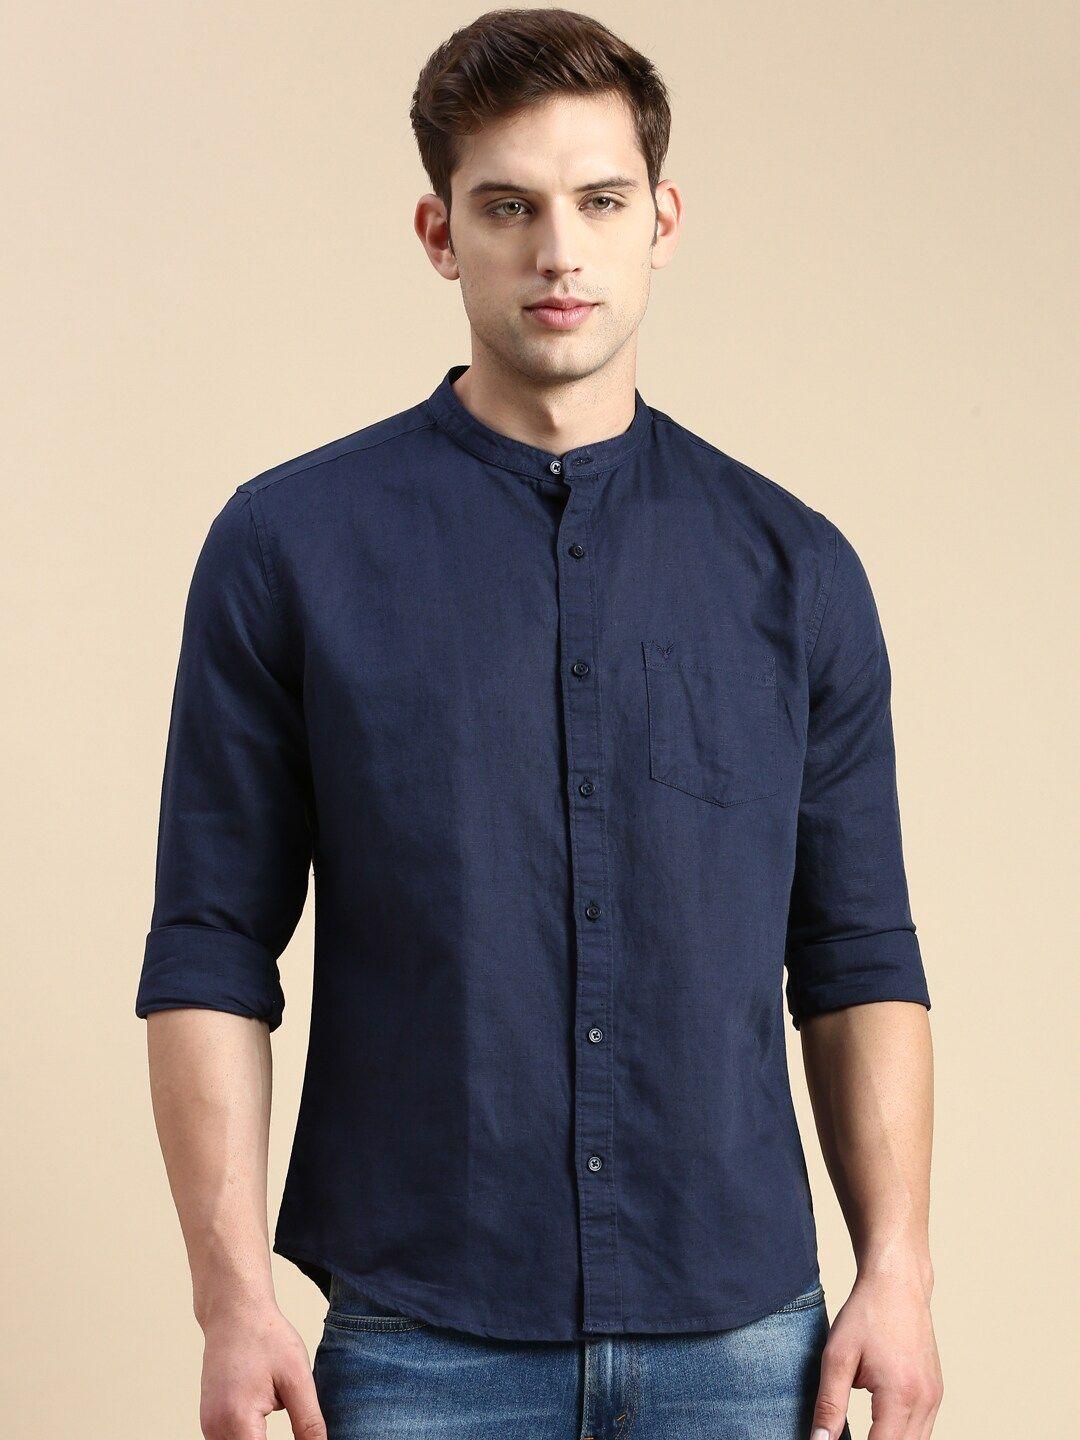 showoff men cotton linen comfort slim fit opaque casual shirt